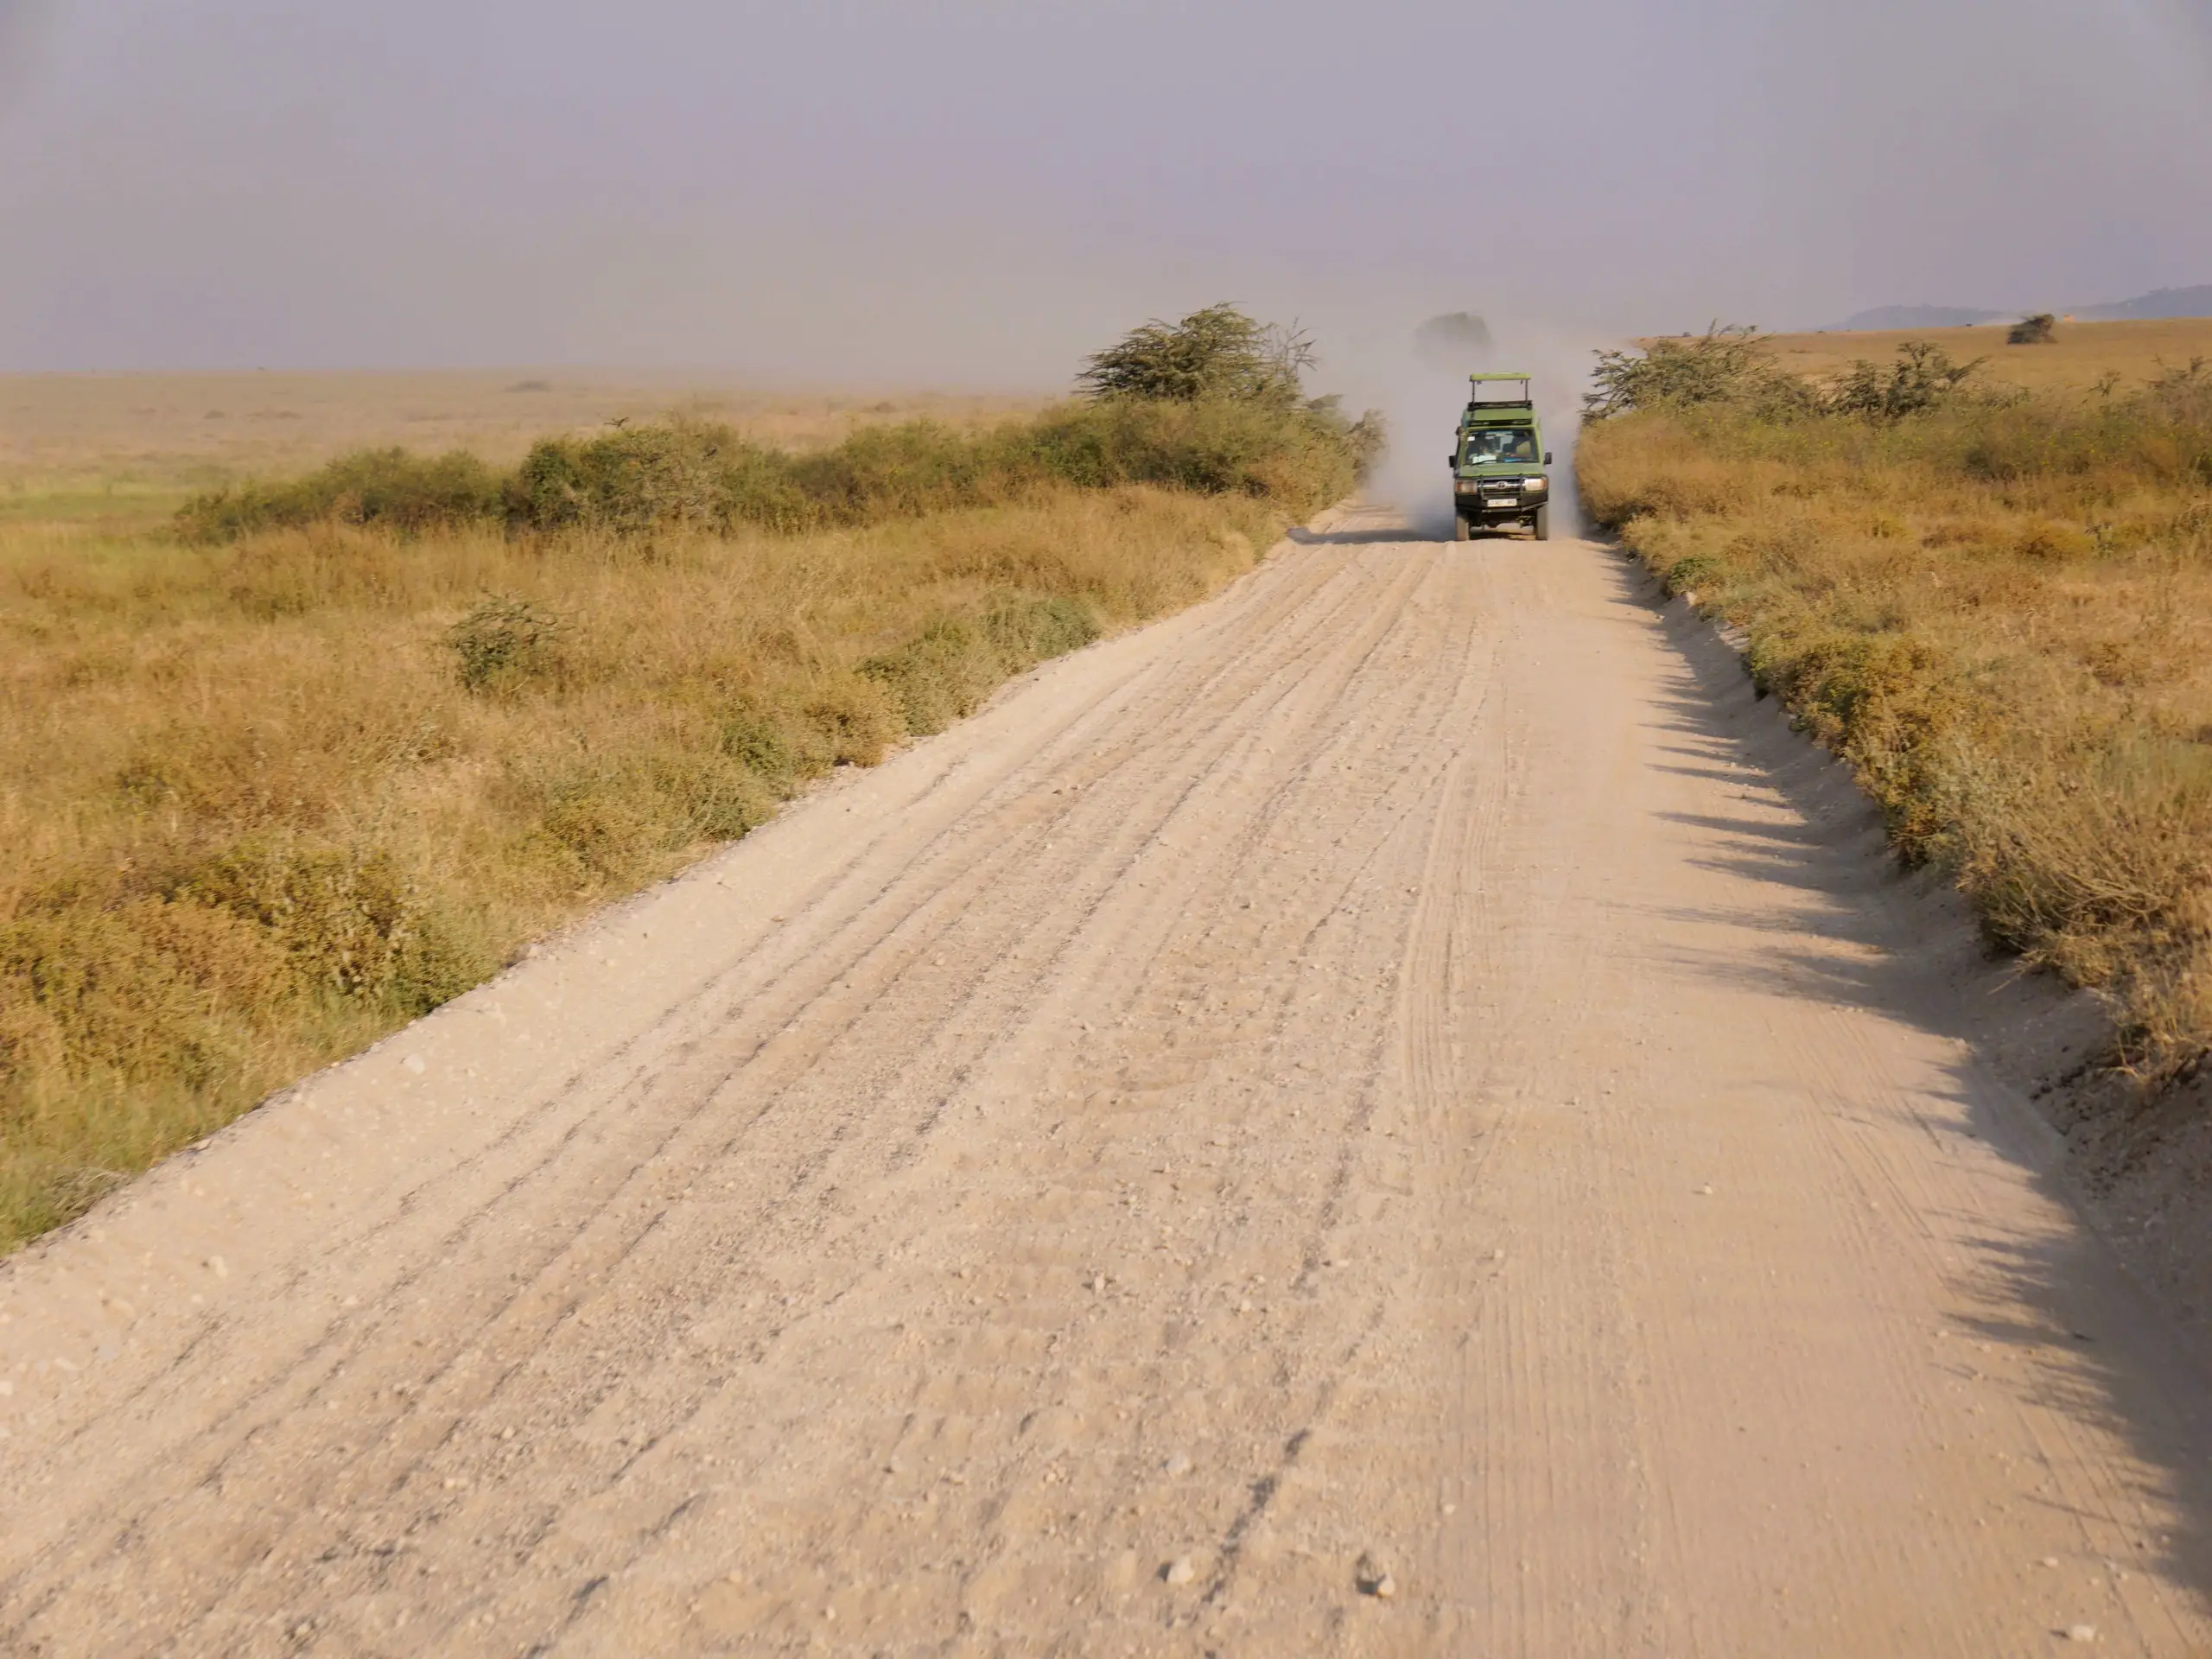 Dusty roads of Serengeti National Park